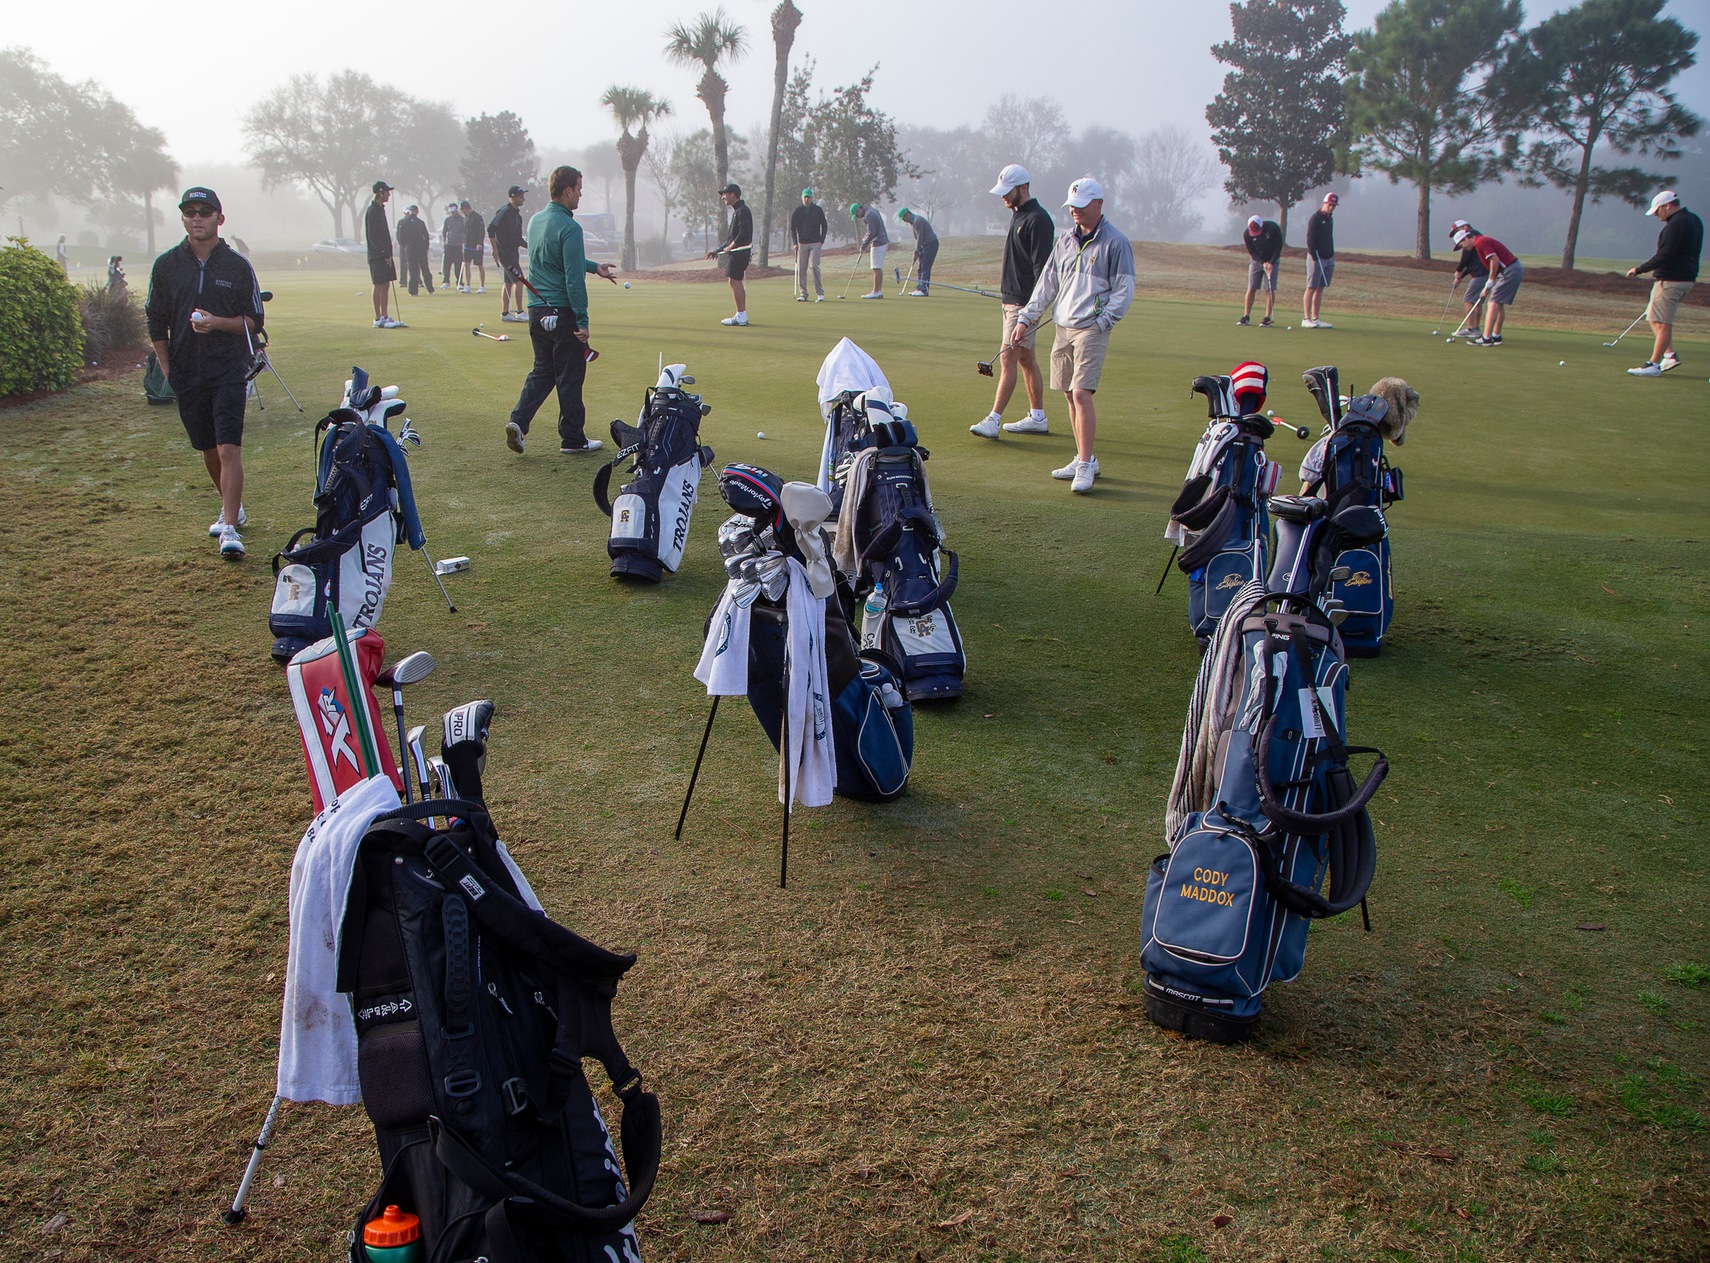 Men's golf team ready for national tournament next week at Duran Golf Club